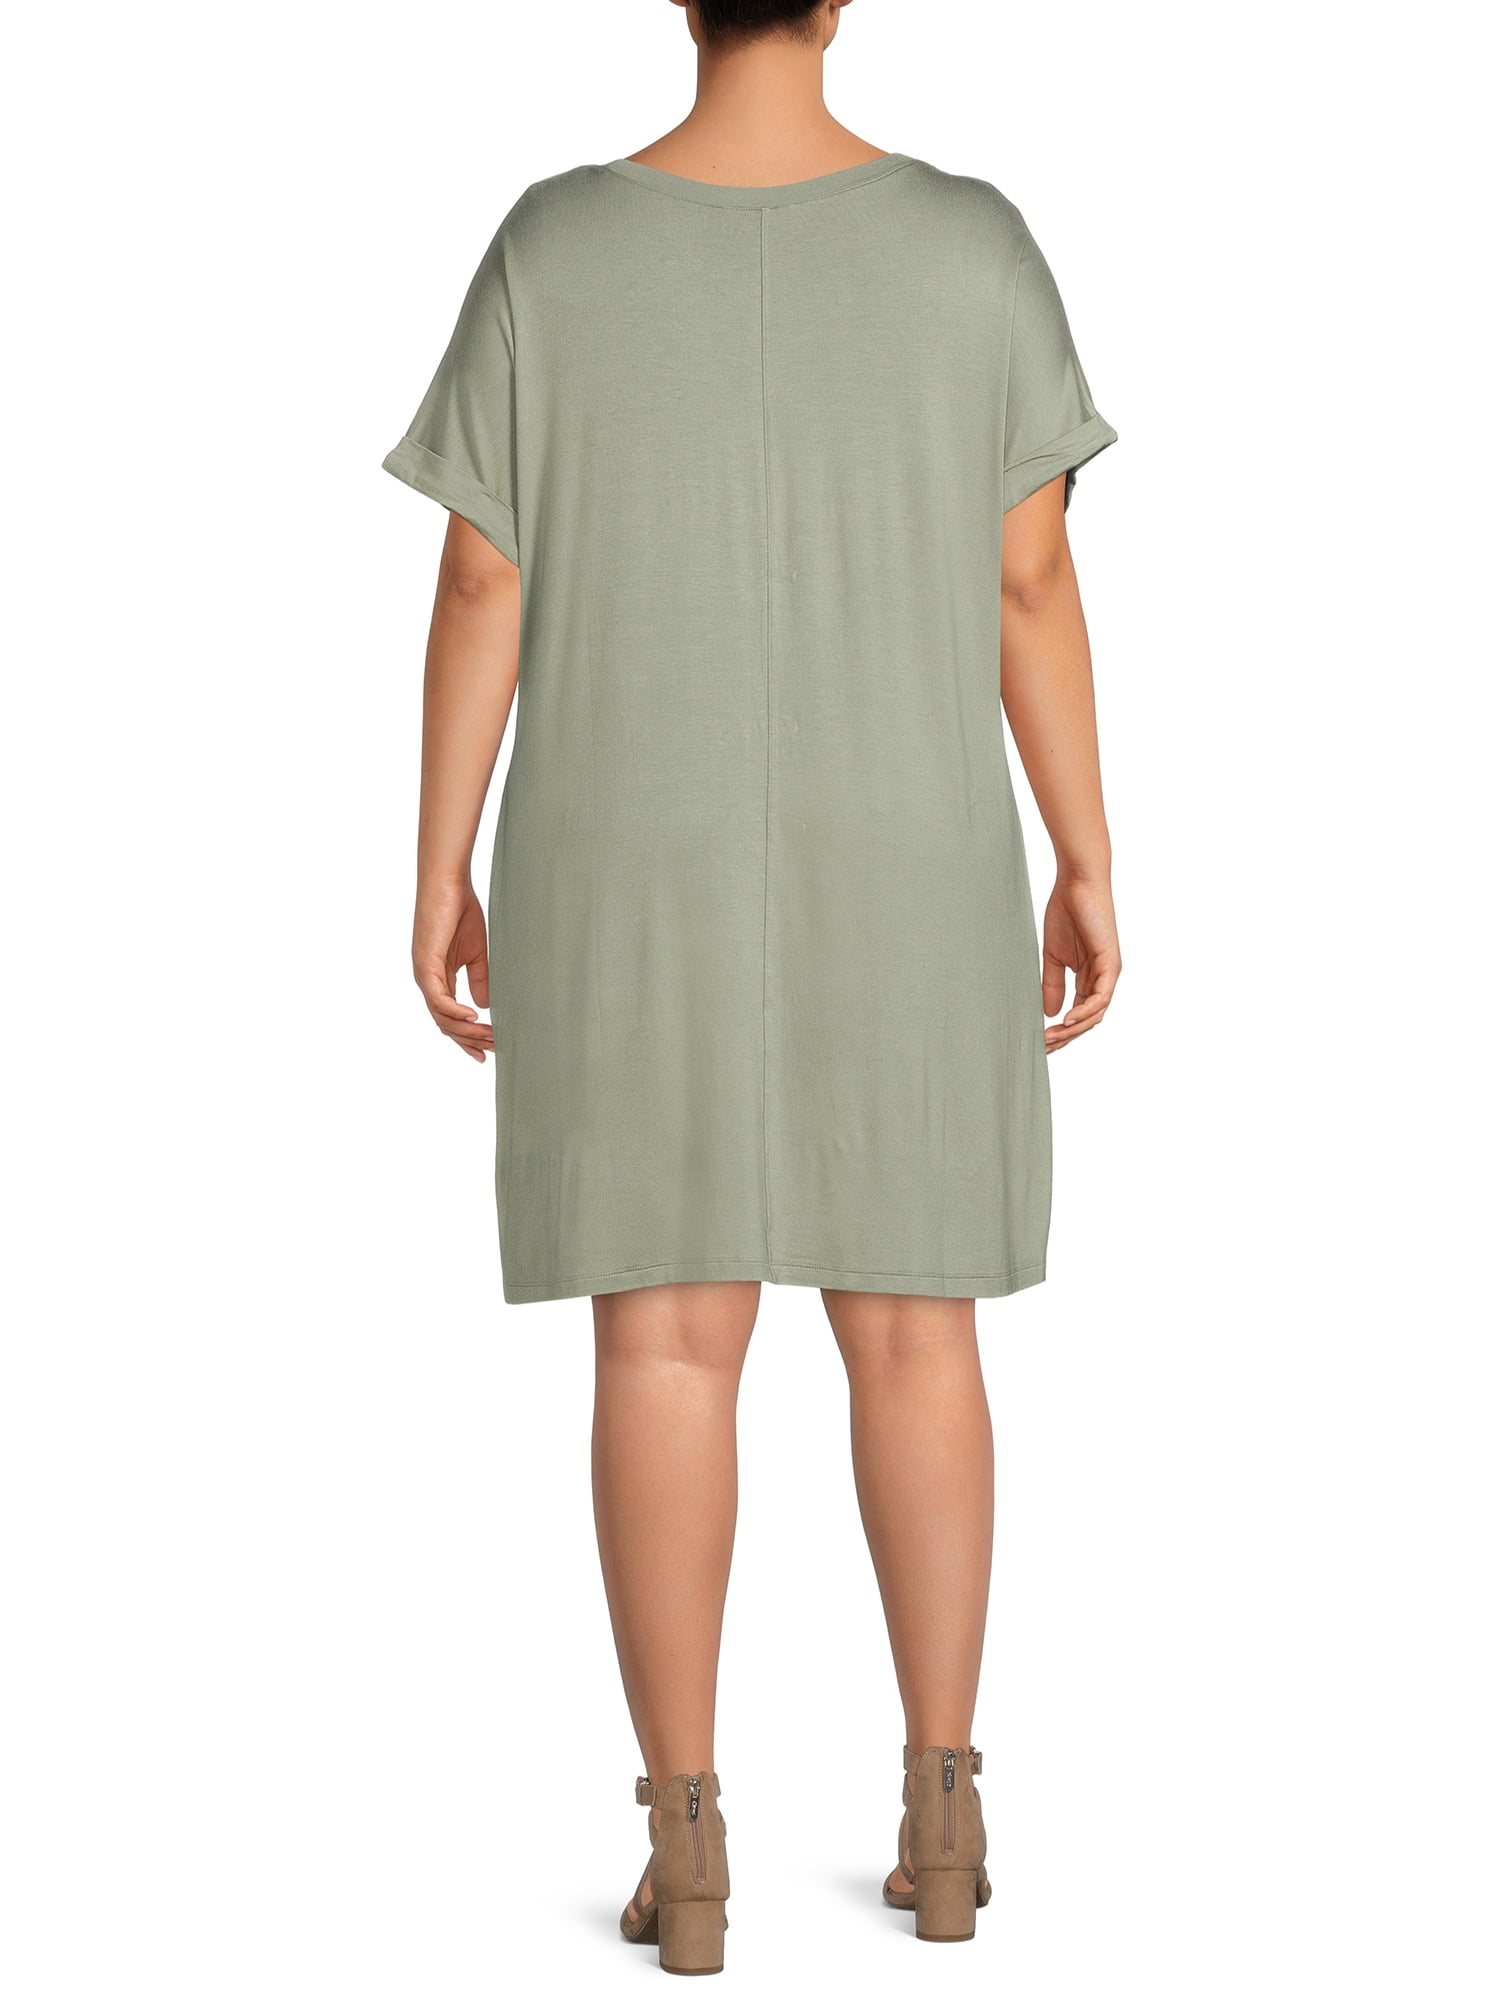 Terra & Women's Plus Size Roll Cuff T-Shirt Dress - Walmart.com